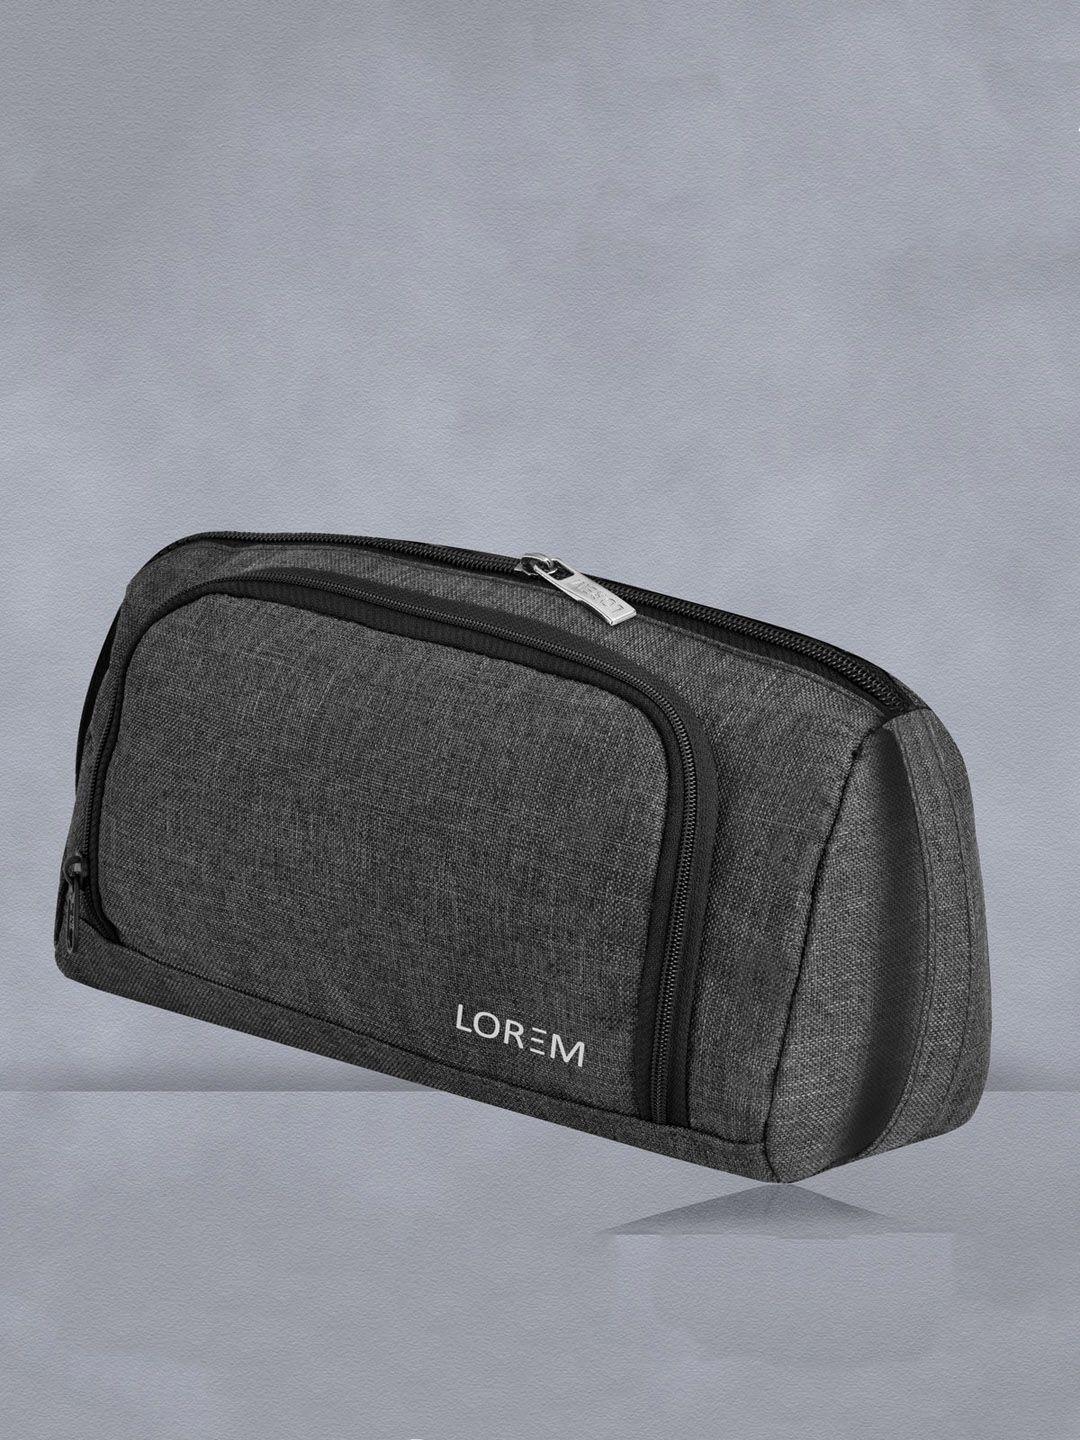 lorem textured durable travel accessory